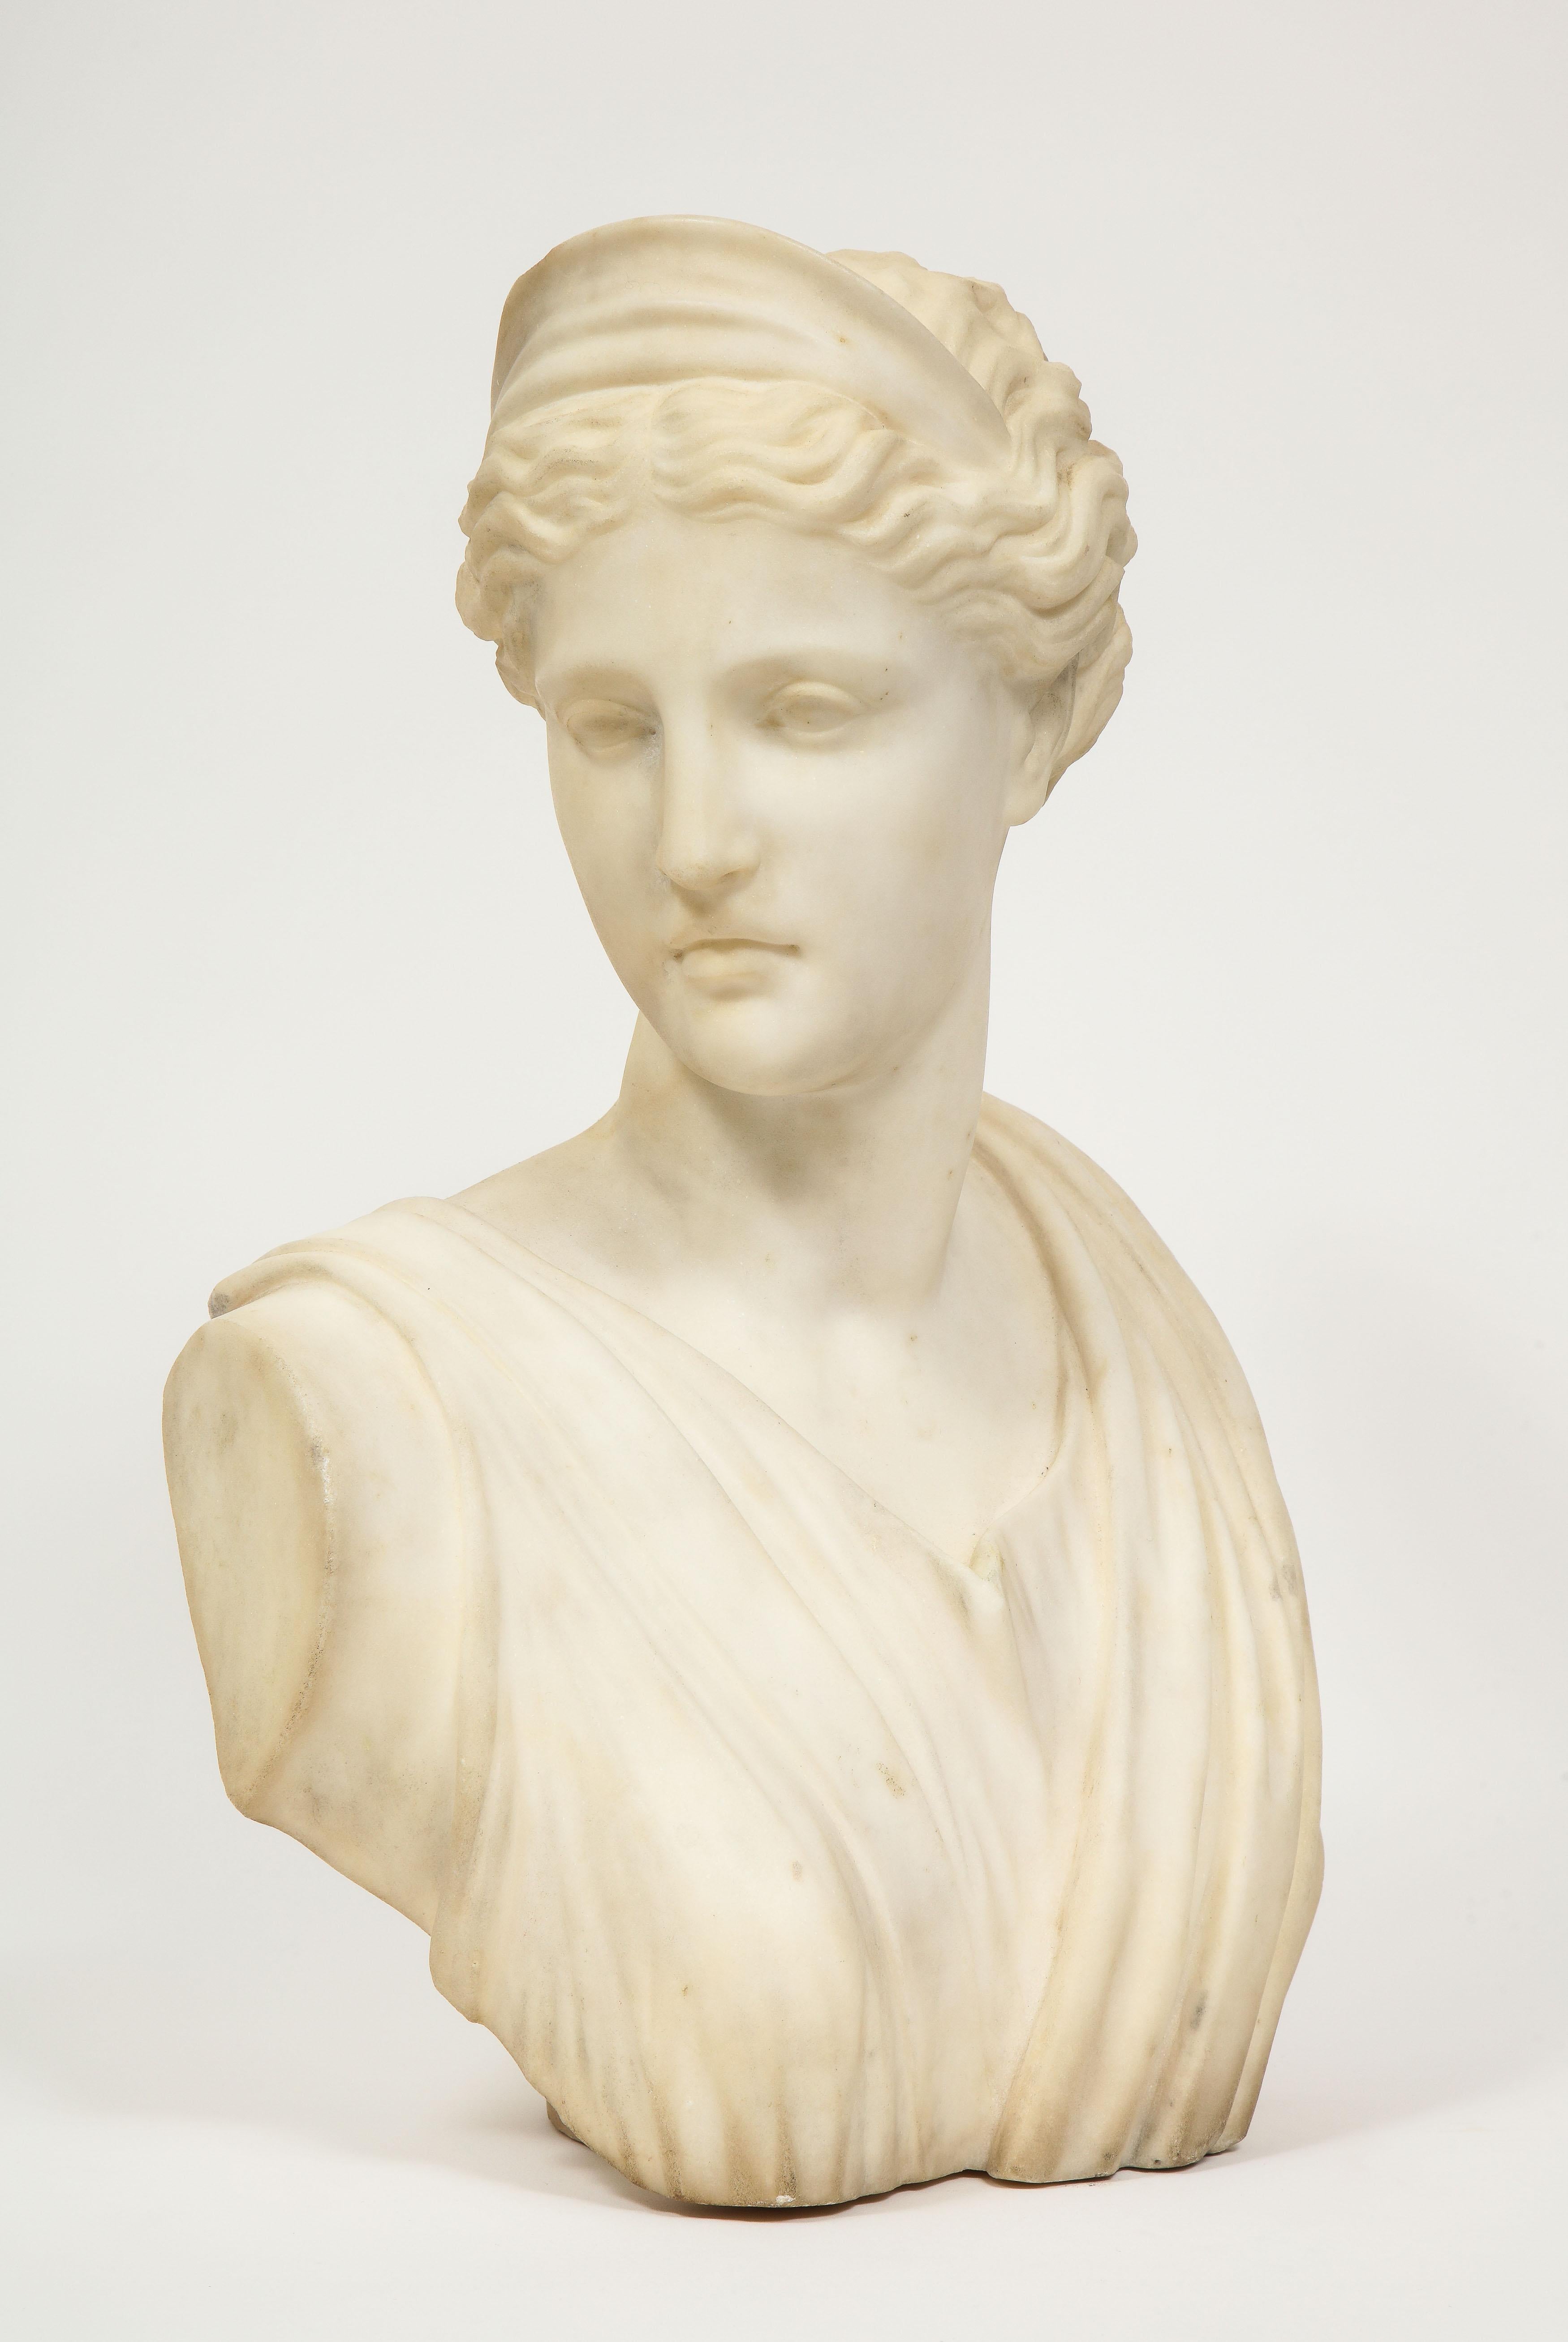 (Italian School, 19th century) a neoclassical white marble bust of Goddess Diana Artemis, circa 1870.

